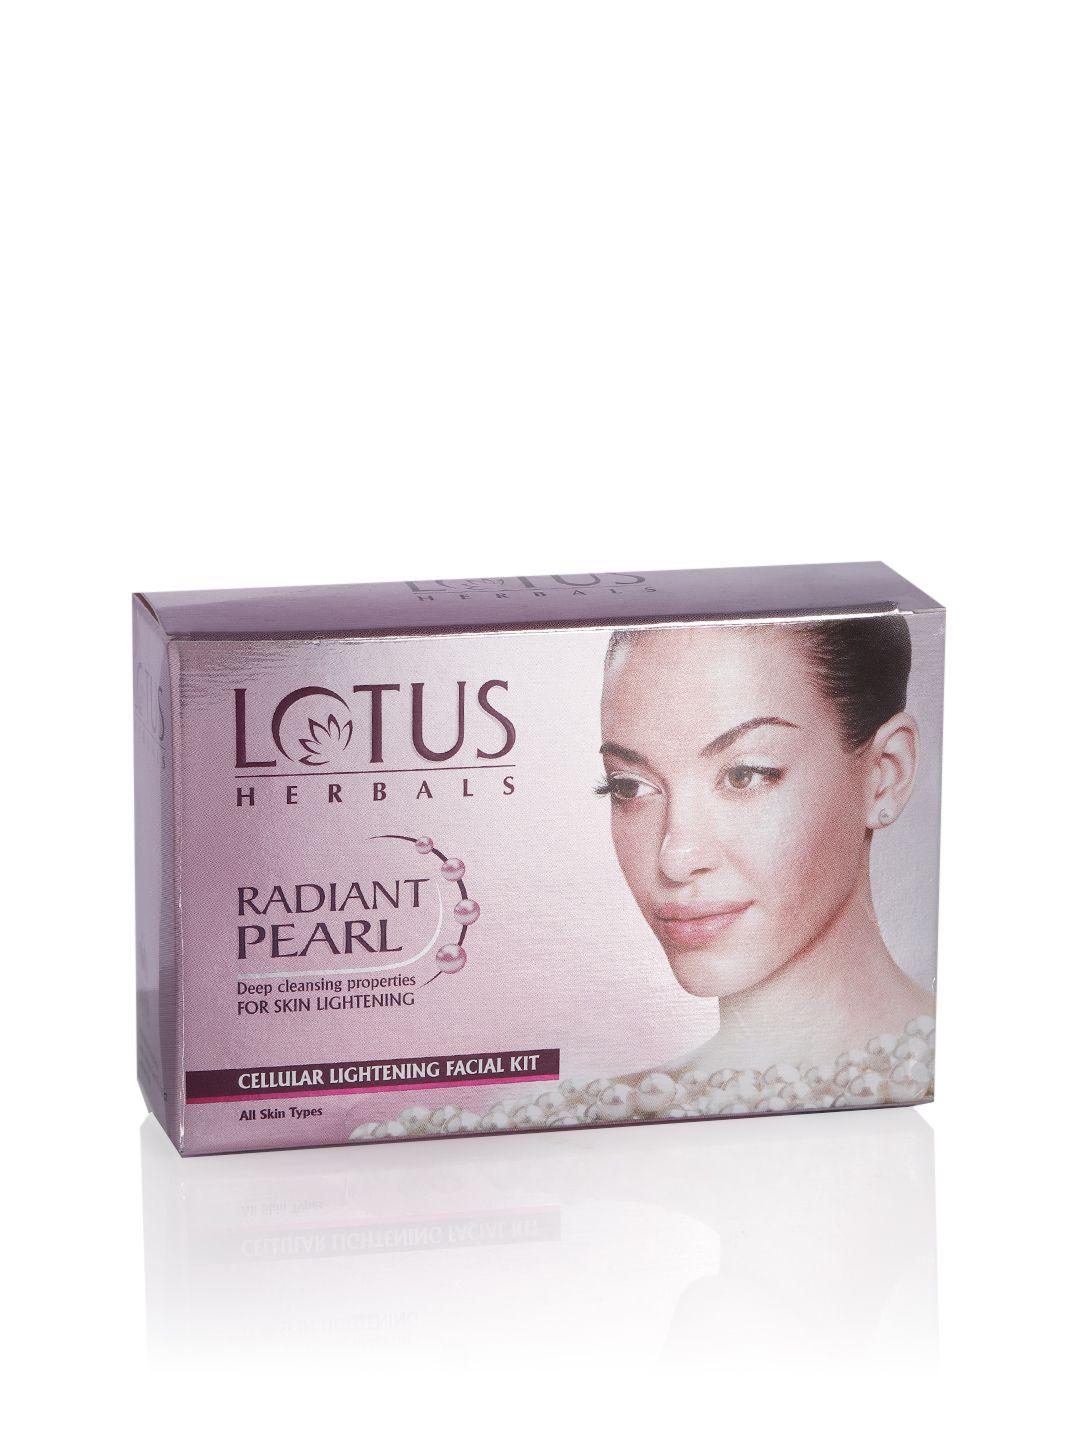 lotus-herbals-radiant-pearl-cellular-lightening-facial-kit